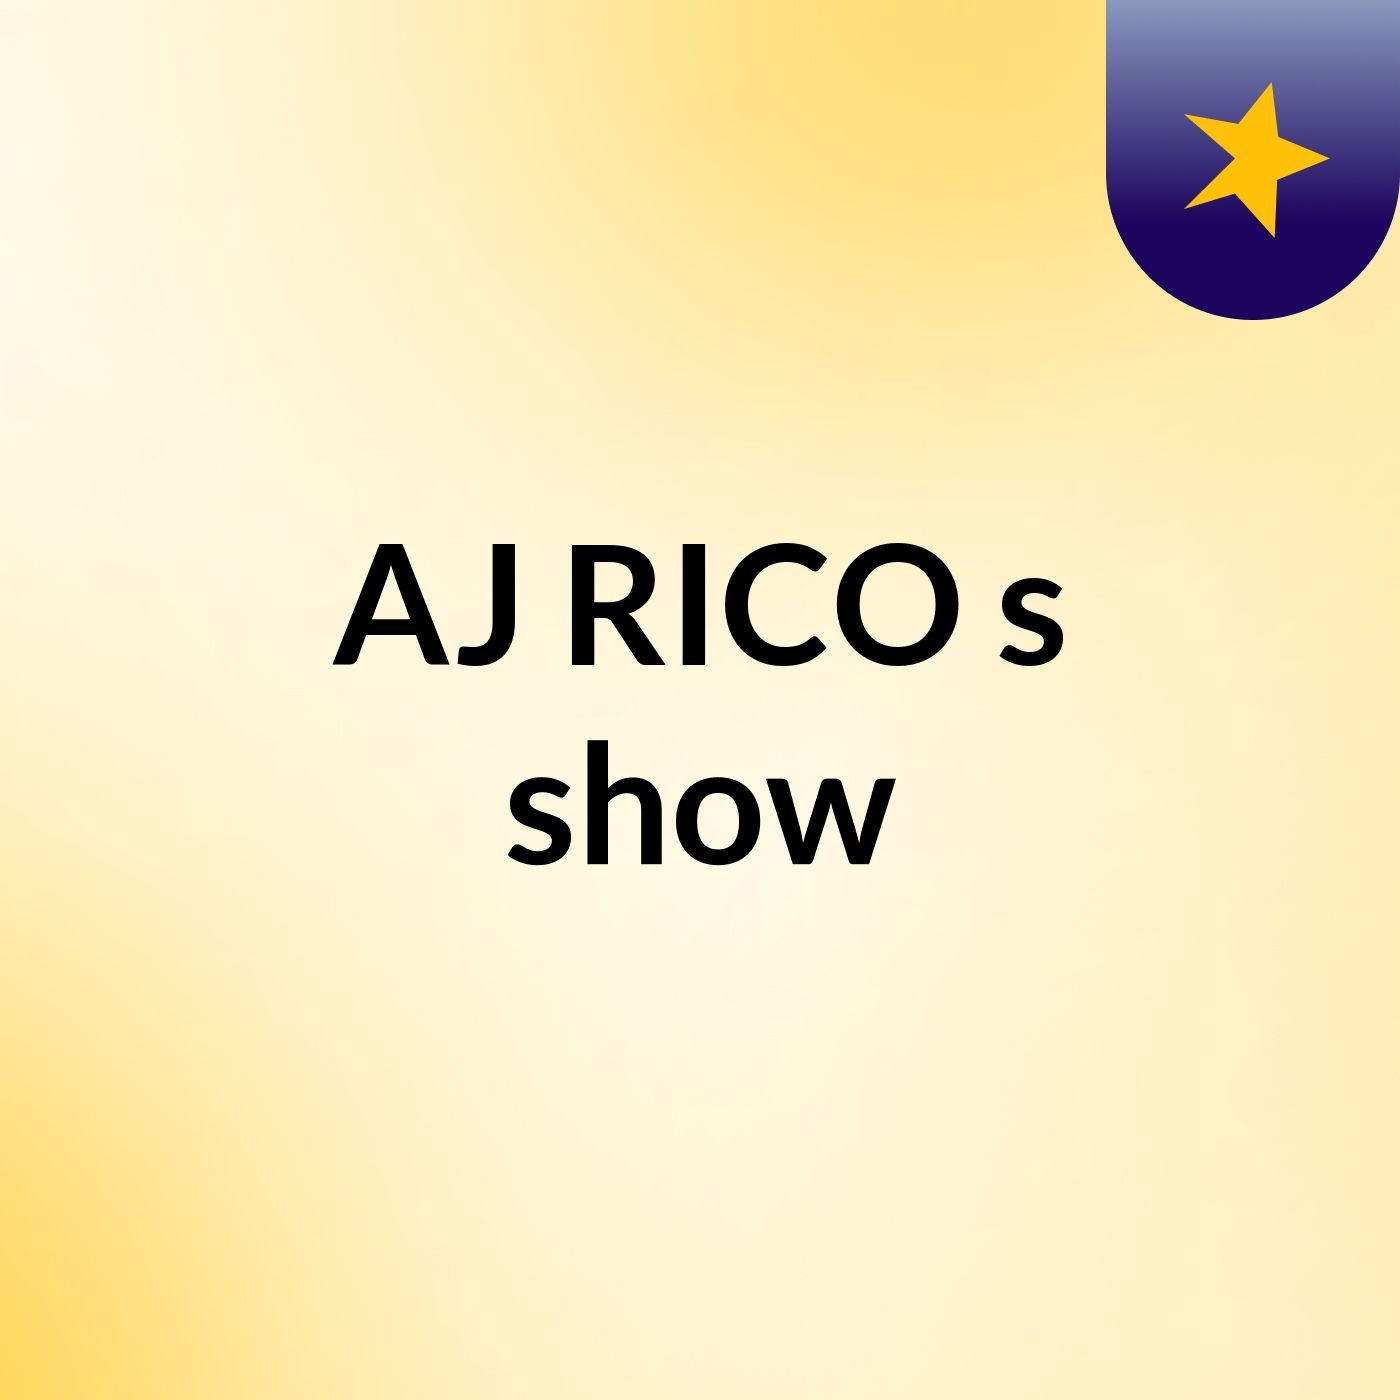 AJ RICO's show